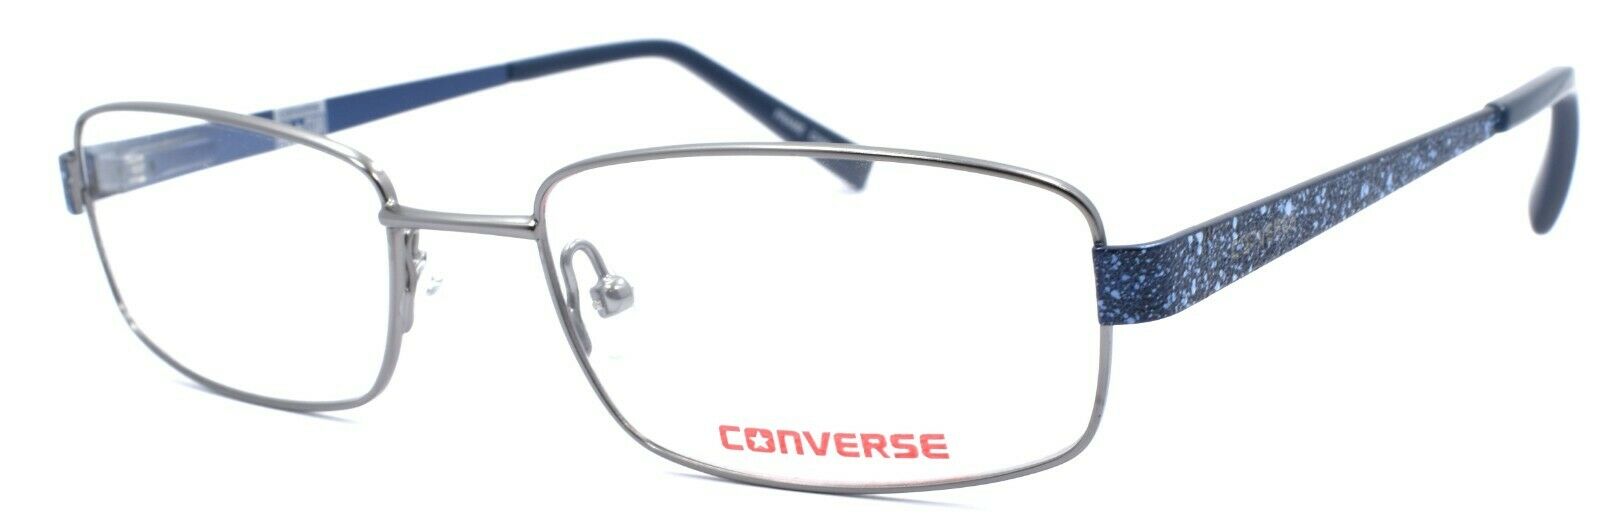 1-CONVERSE K101 Kids Boys Eyeglasses Frames 51-18-135 Dark Gunmetal + CASE-751286294576-IKSpecs